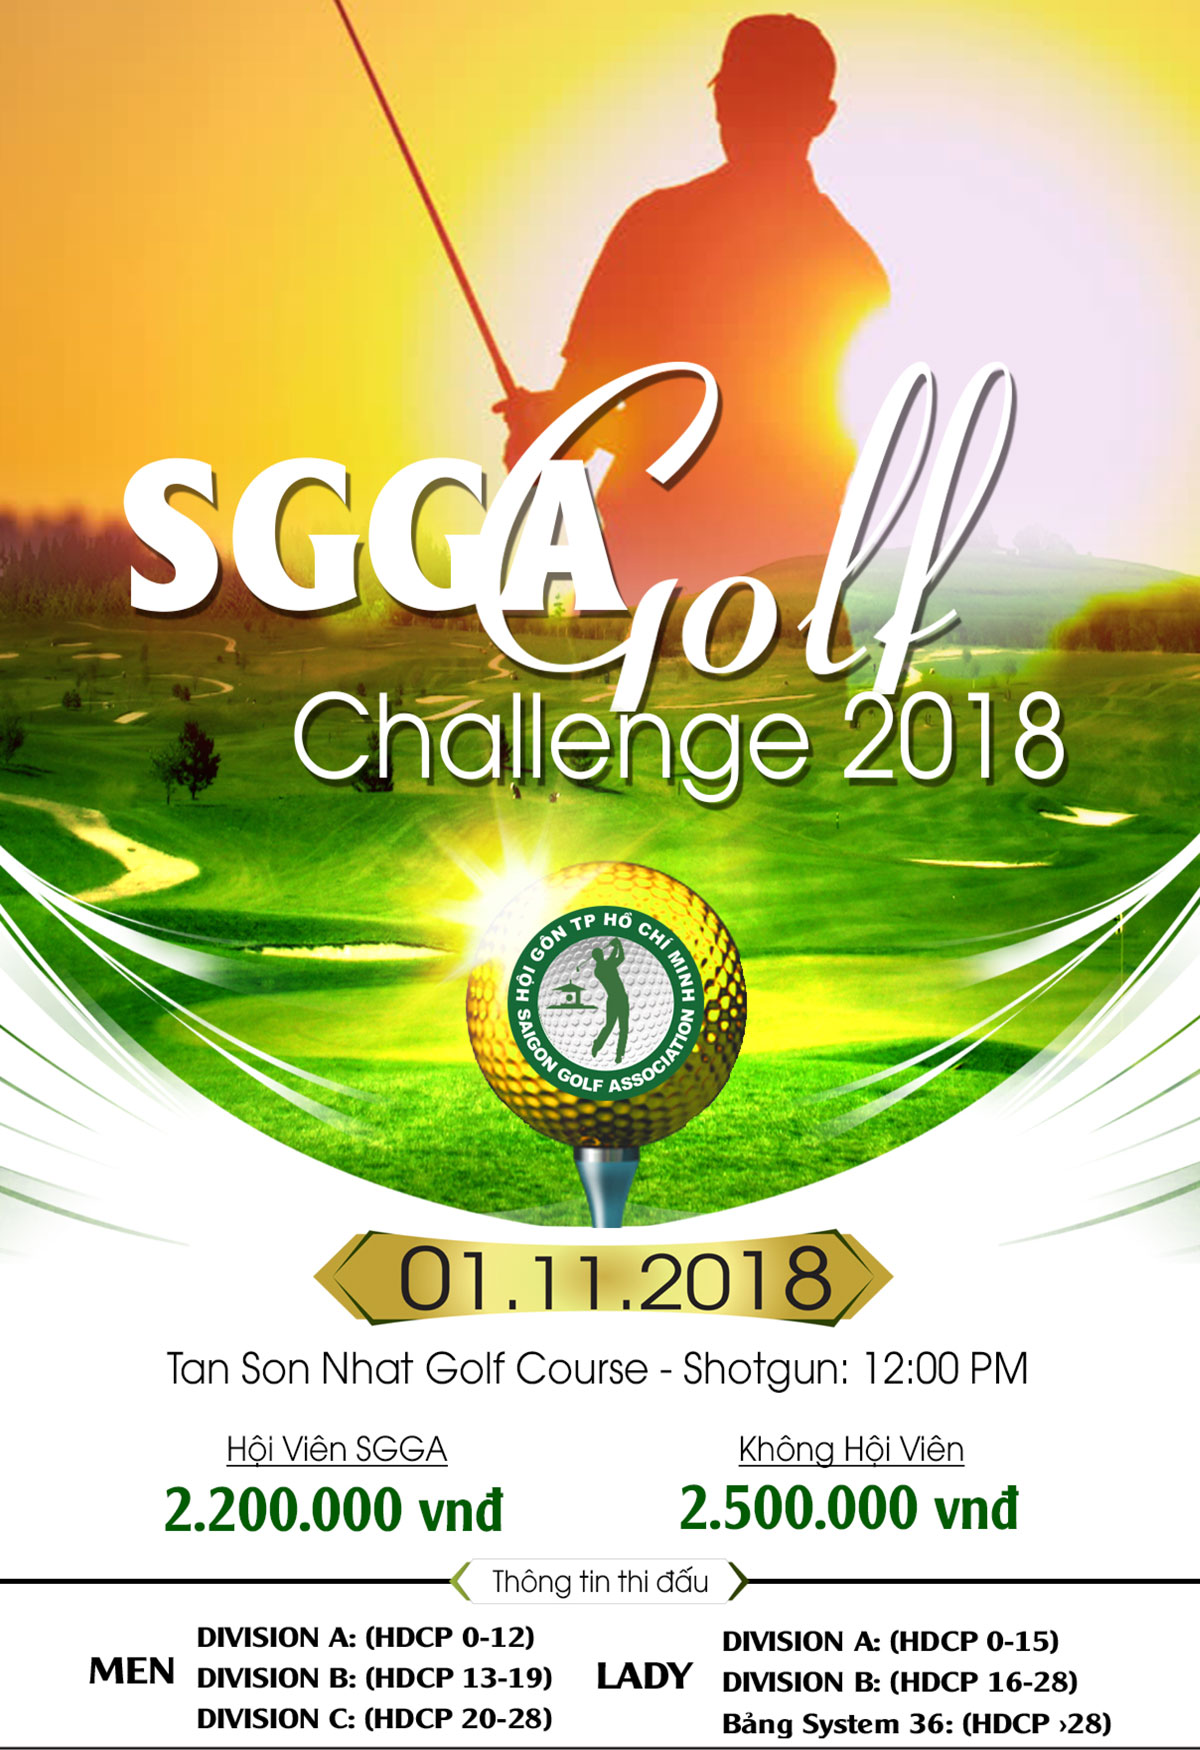 Hơn 140 golfer sẽ tham dự giải SGGA Golf Challenge 2018